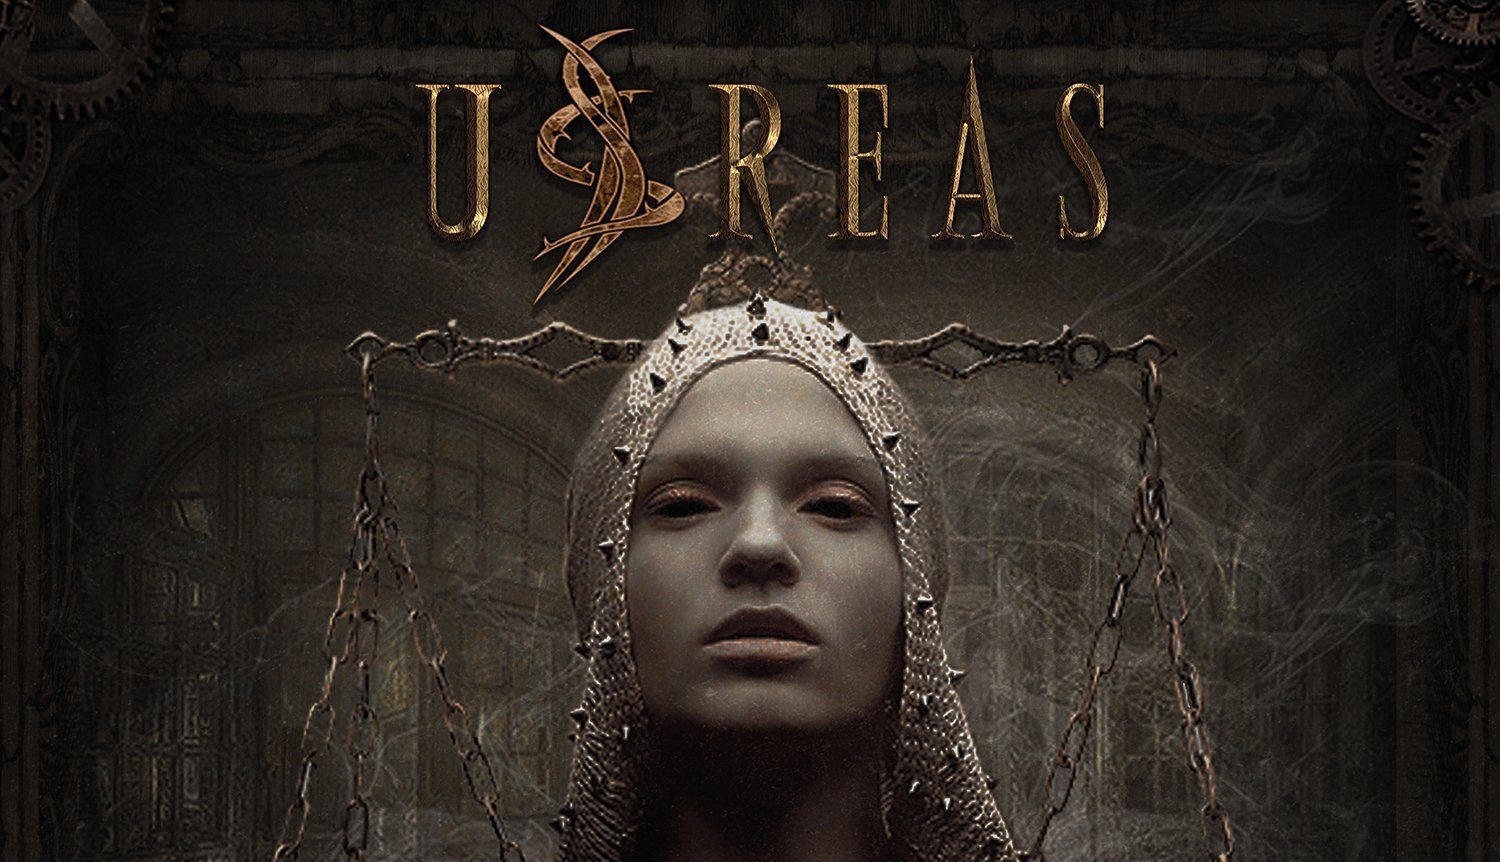 UREAS – The Black Heart Album